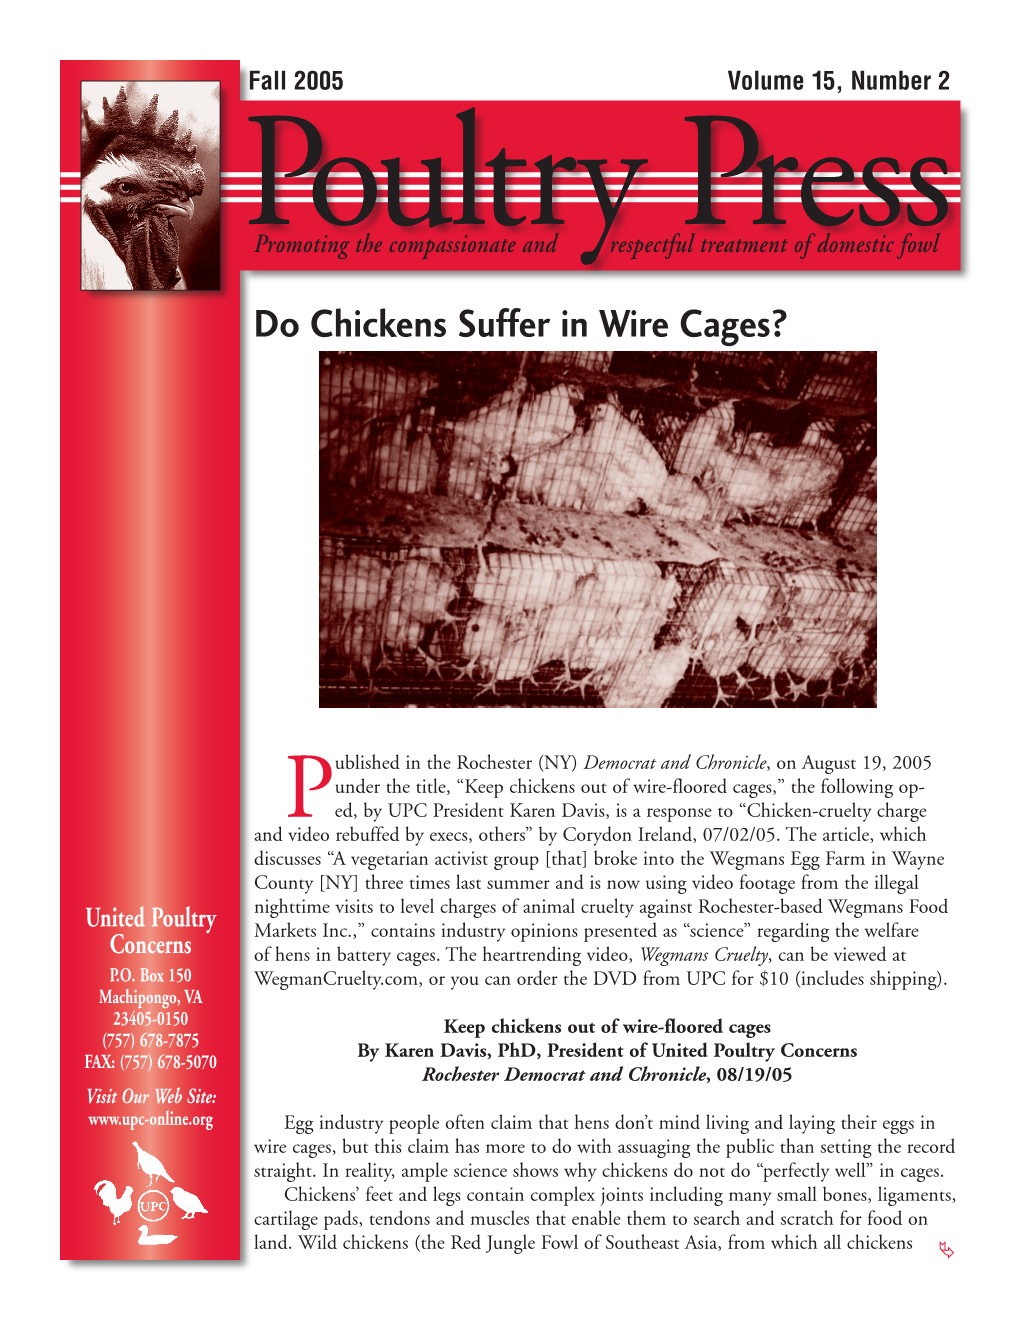 UPC Fall 2005 Poultry Press